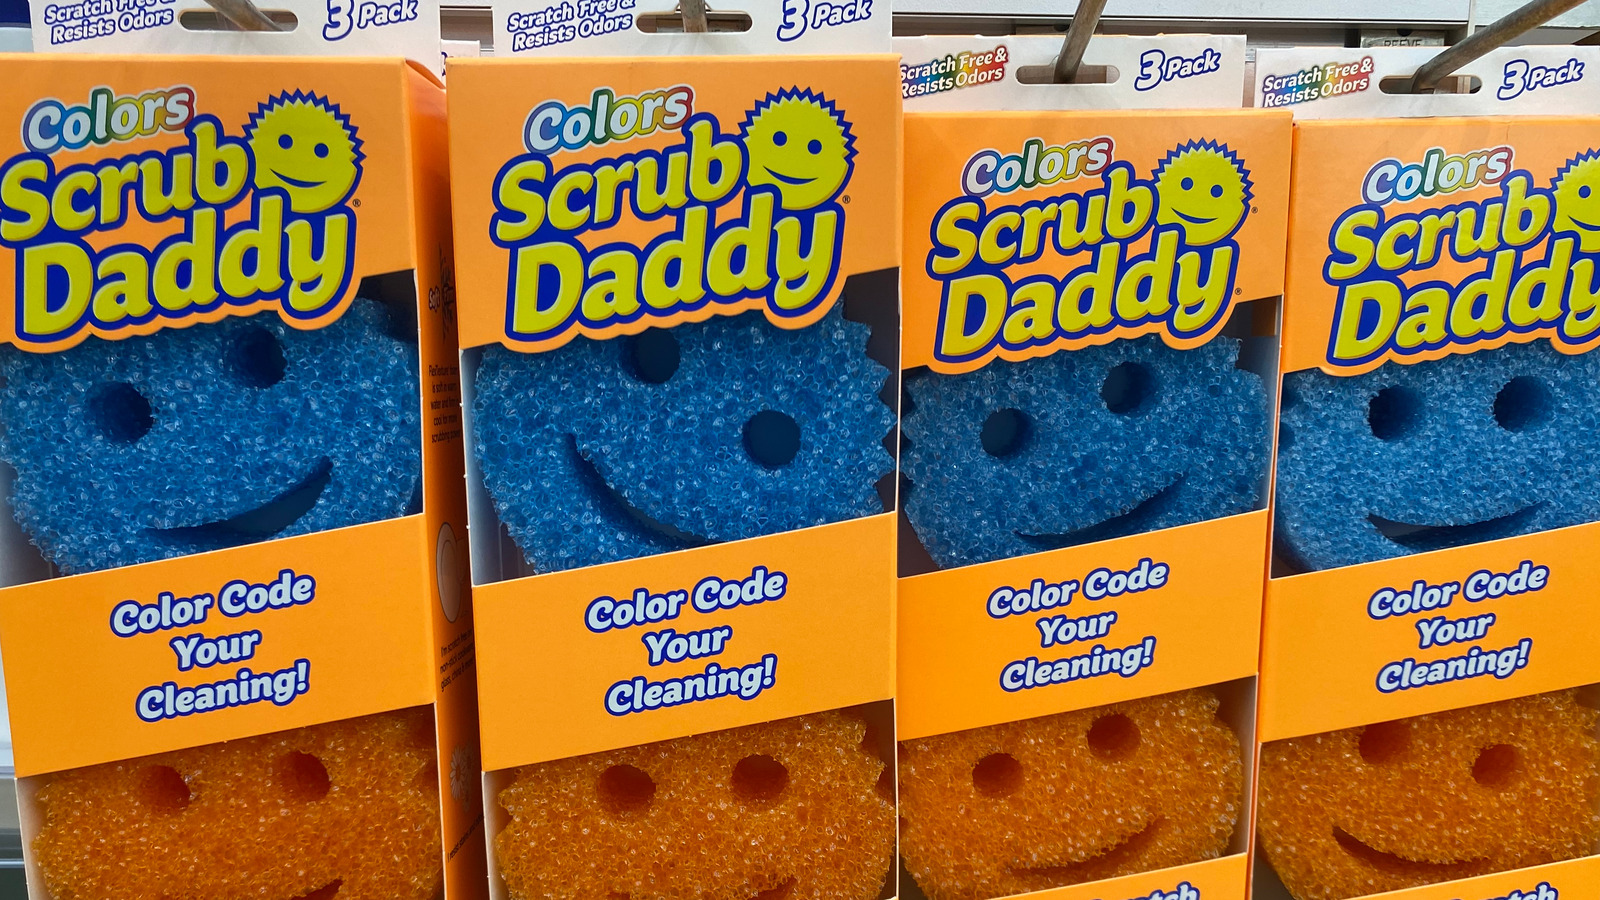 Whatever Happened To Scrub Daddy Sponge After Shark Tank Season 4?